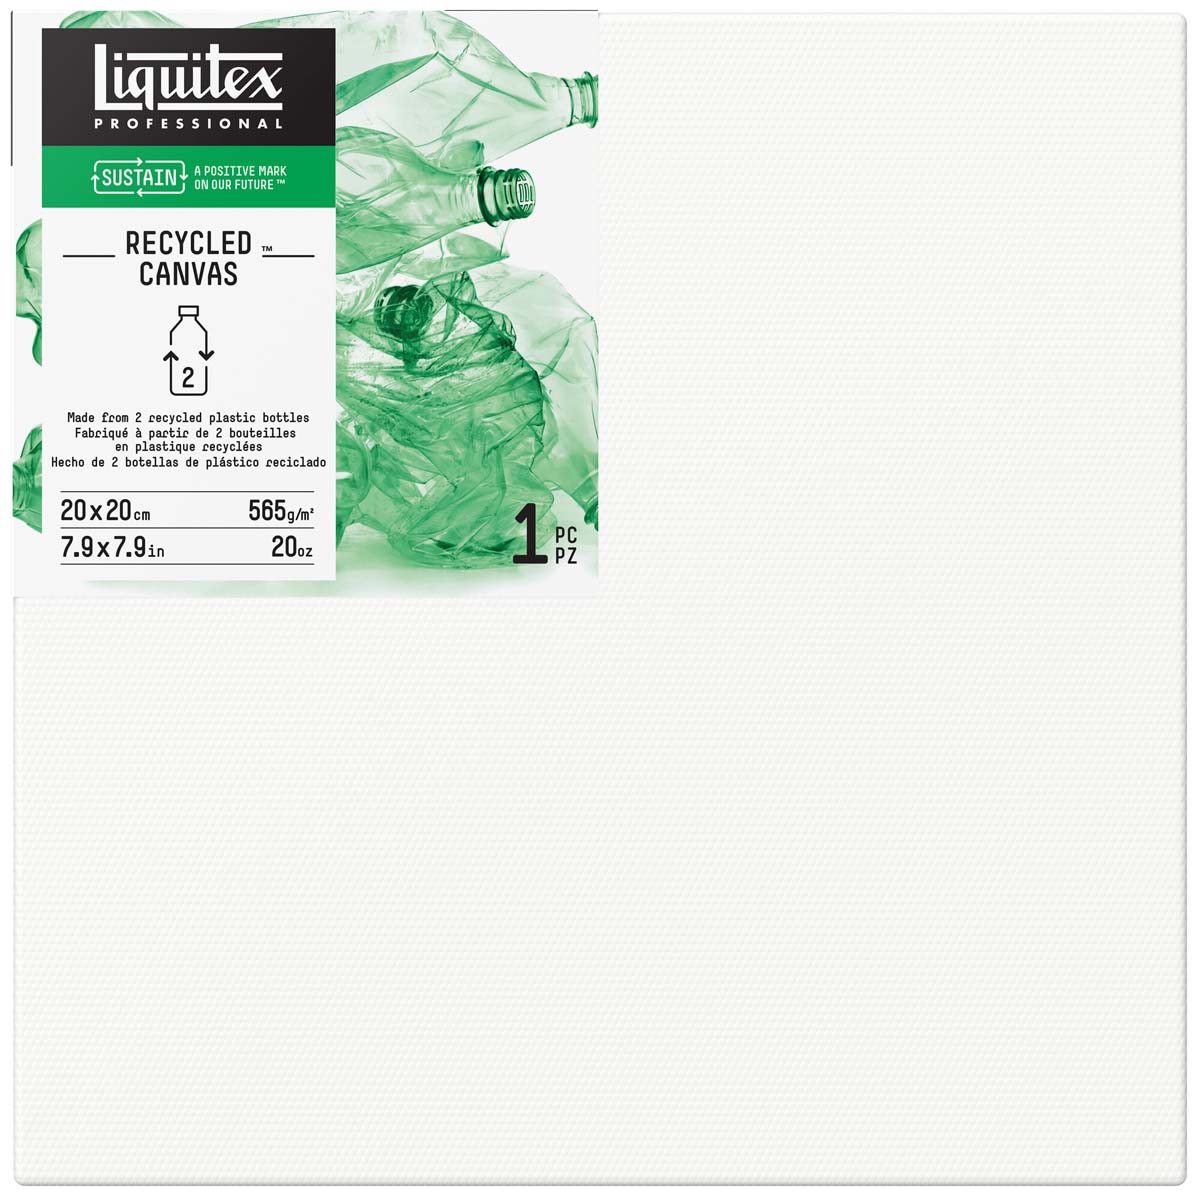 Liquitex Toile Recyclé-Standard Edge - 20x20cm - 8x8"